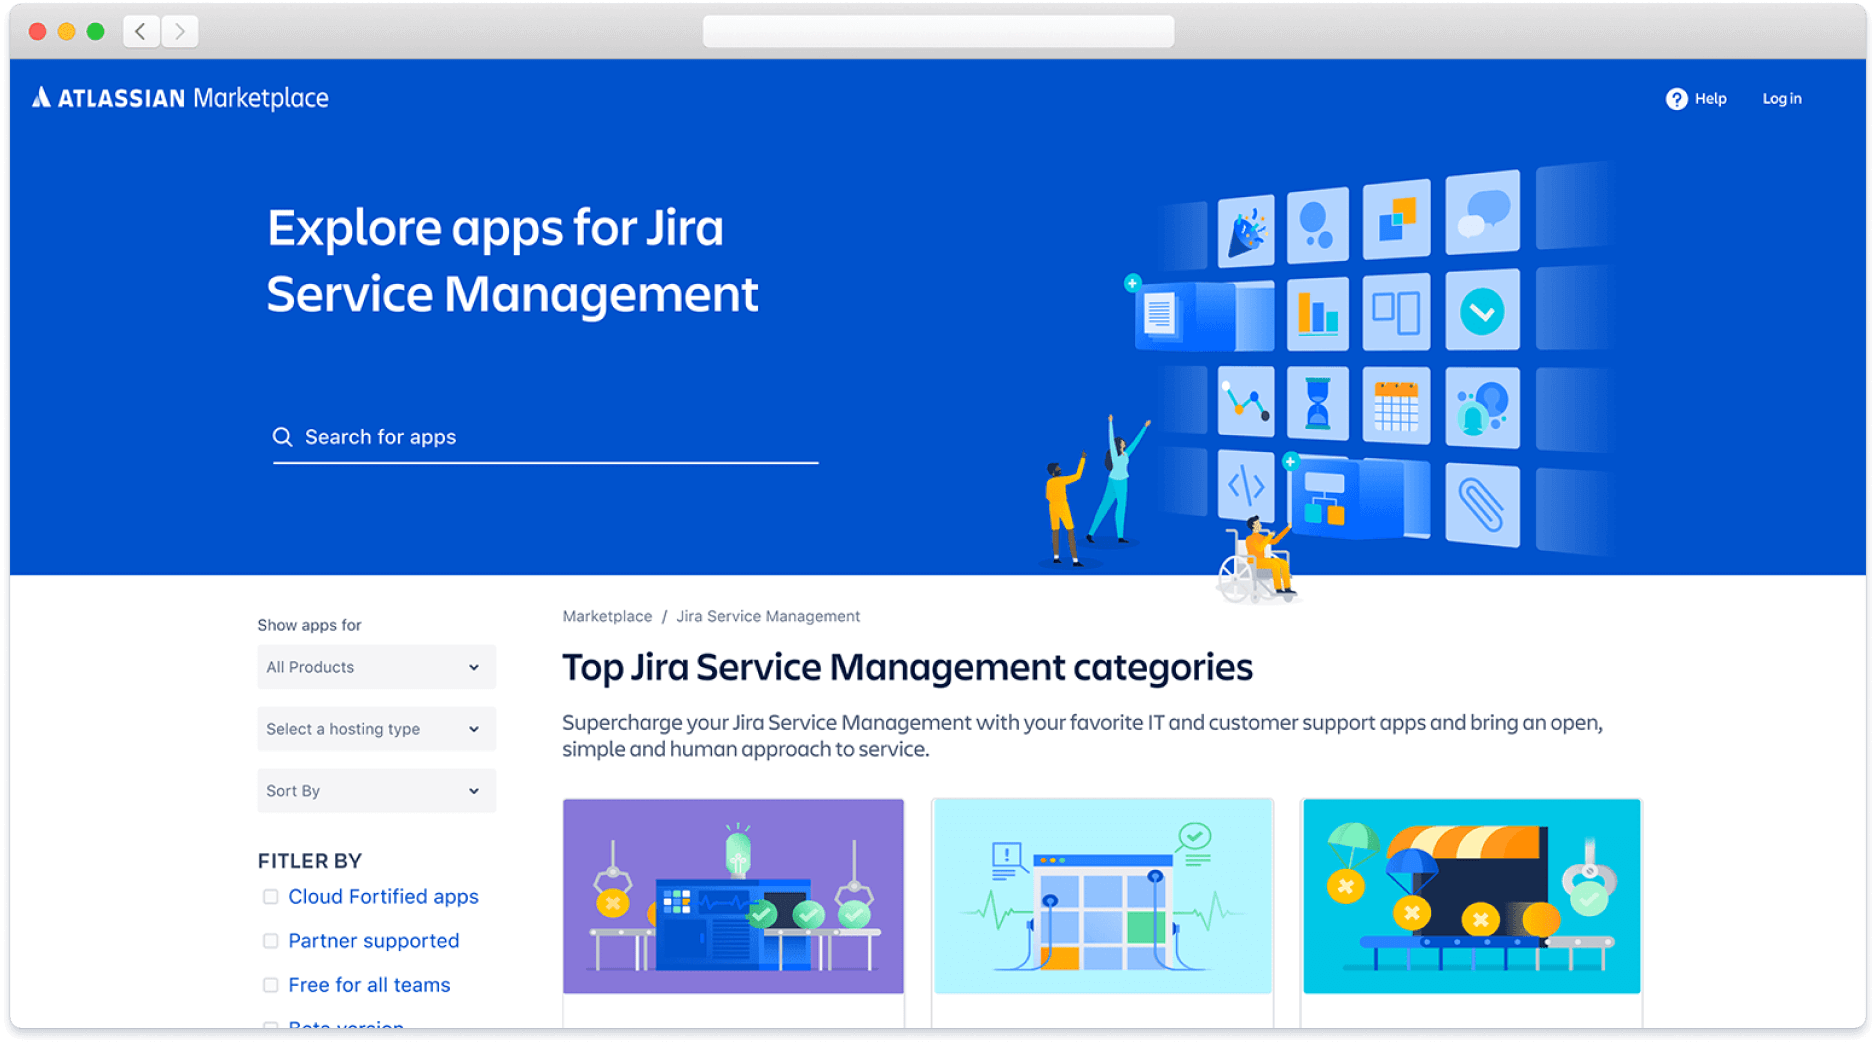 Explora las aplicaciones para Jira Service Management en Atlassian Marketplace